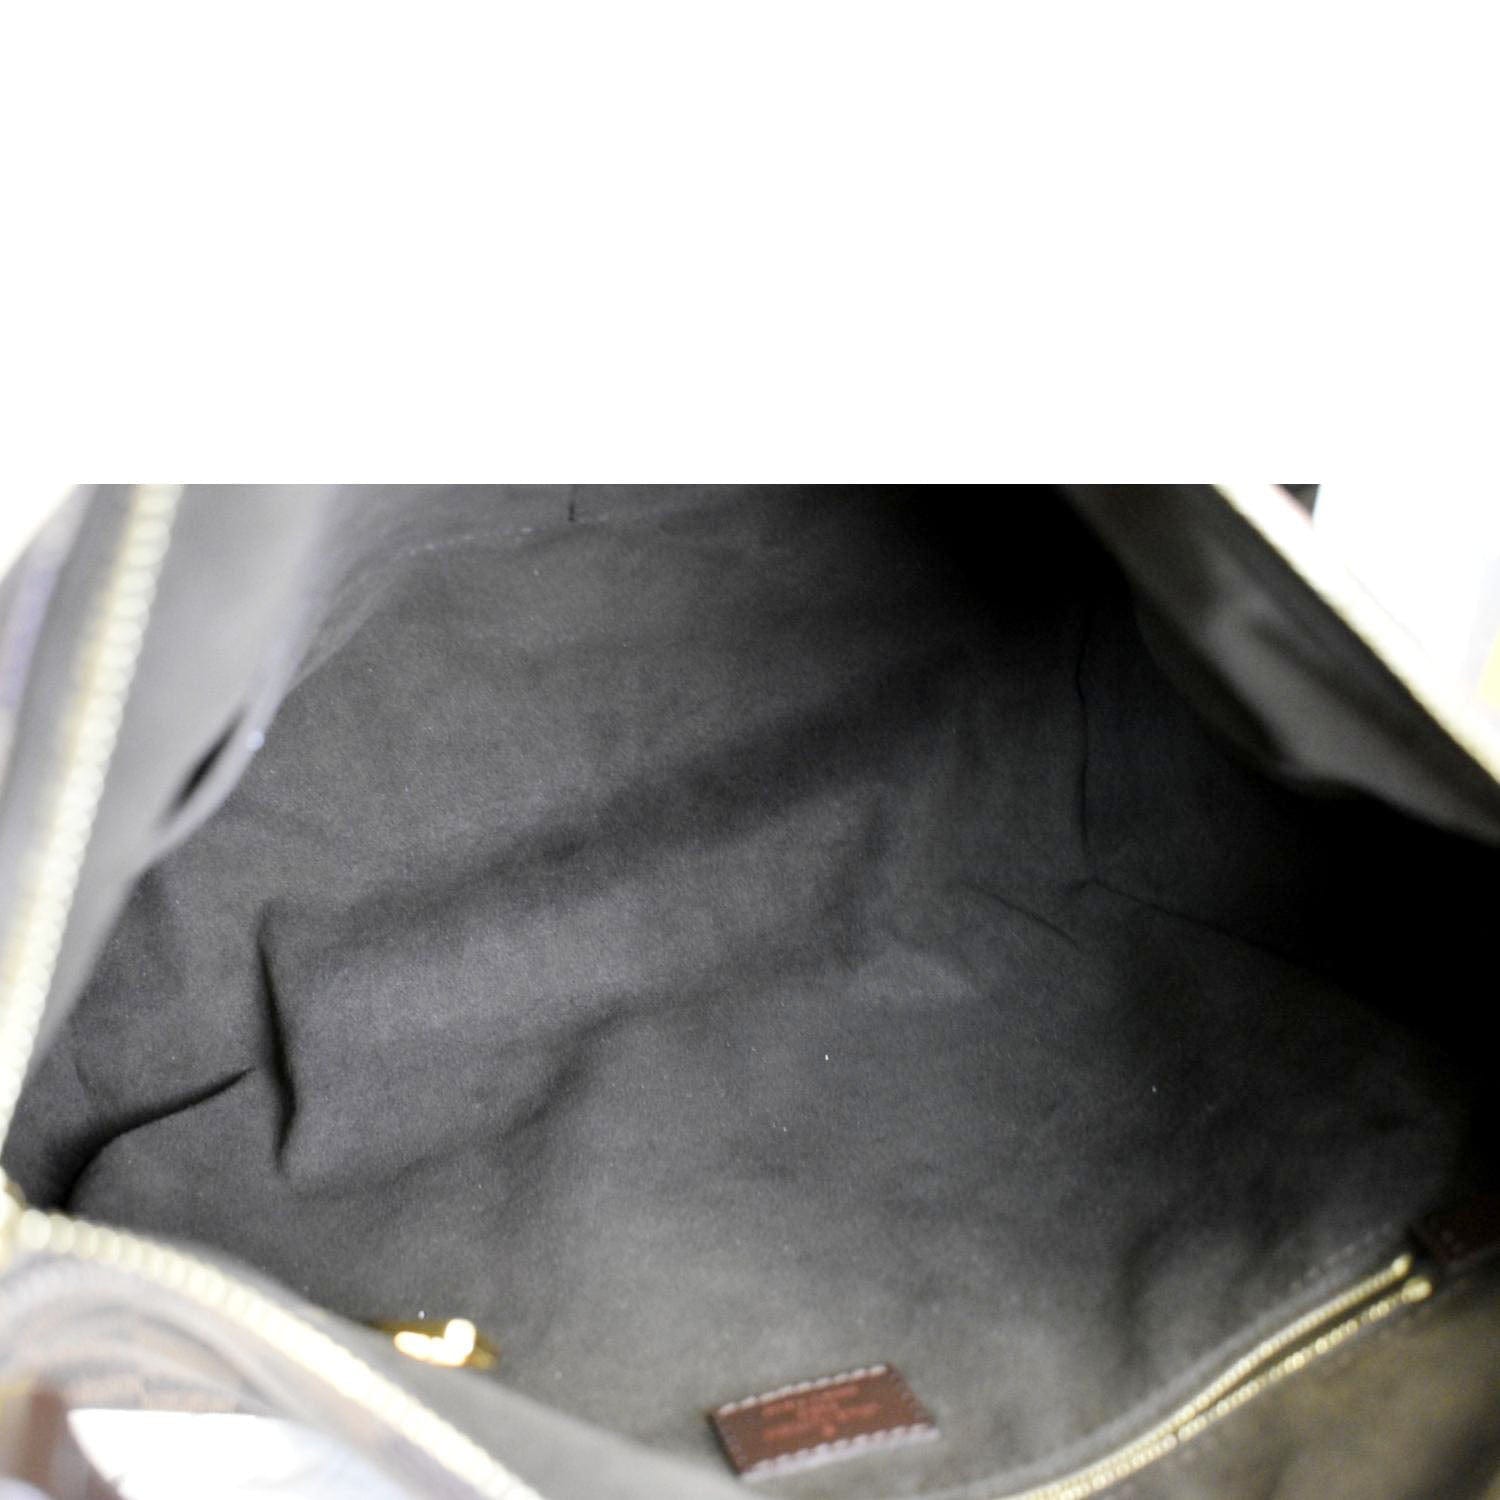 Portobello leather handbag Louis Vuitton Brown in Leather - 31300317